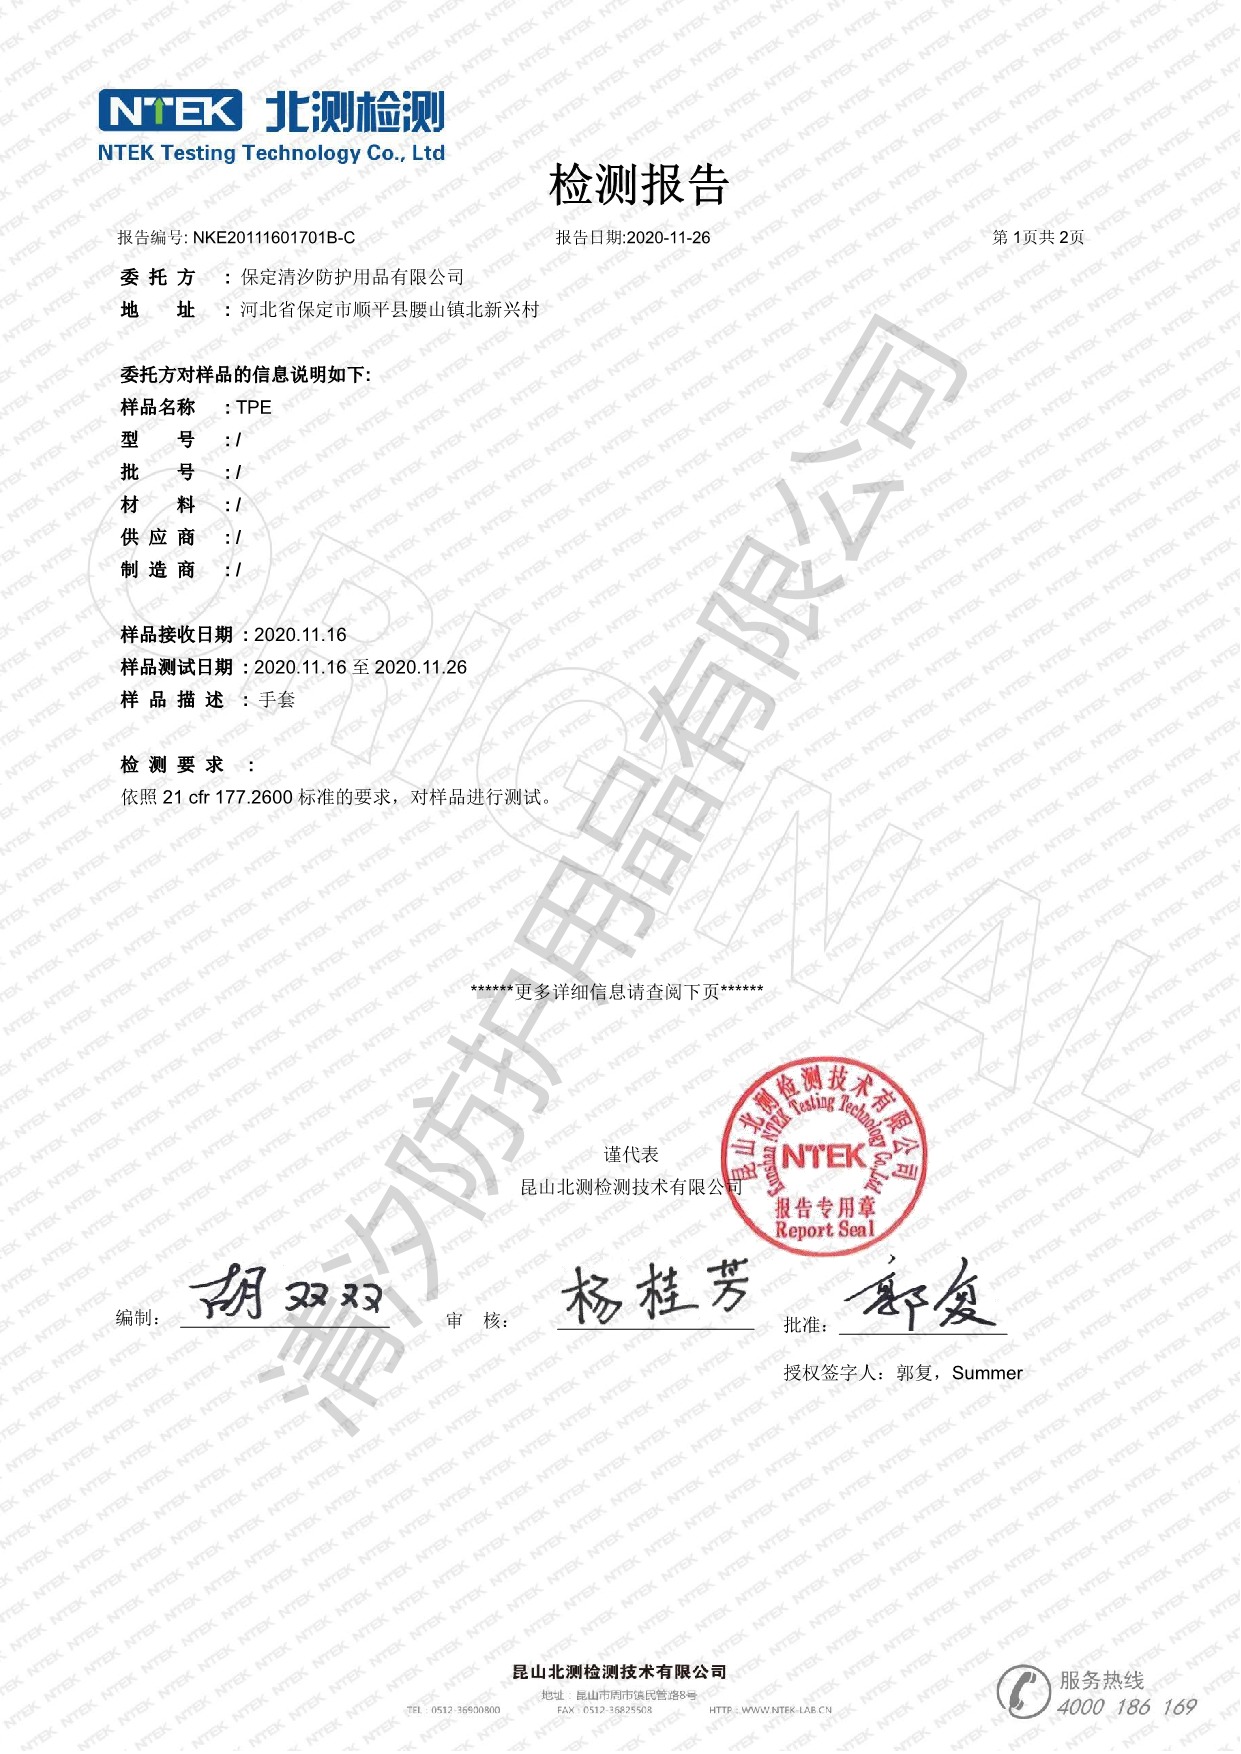 NKE20111601701B-C 清汐 FDA 177.2600 中文   化学生产